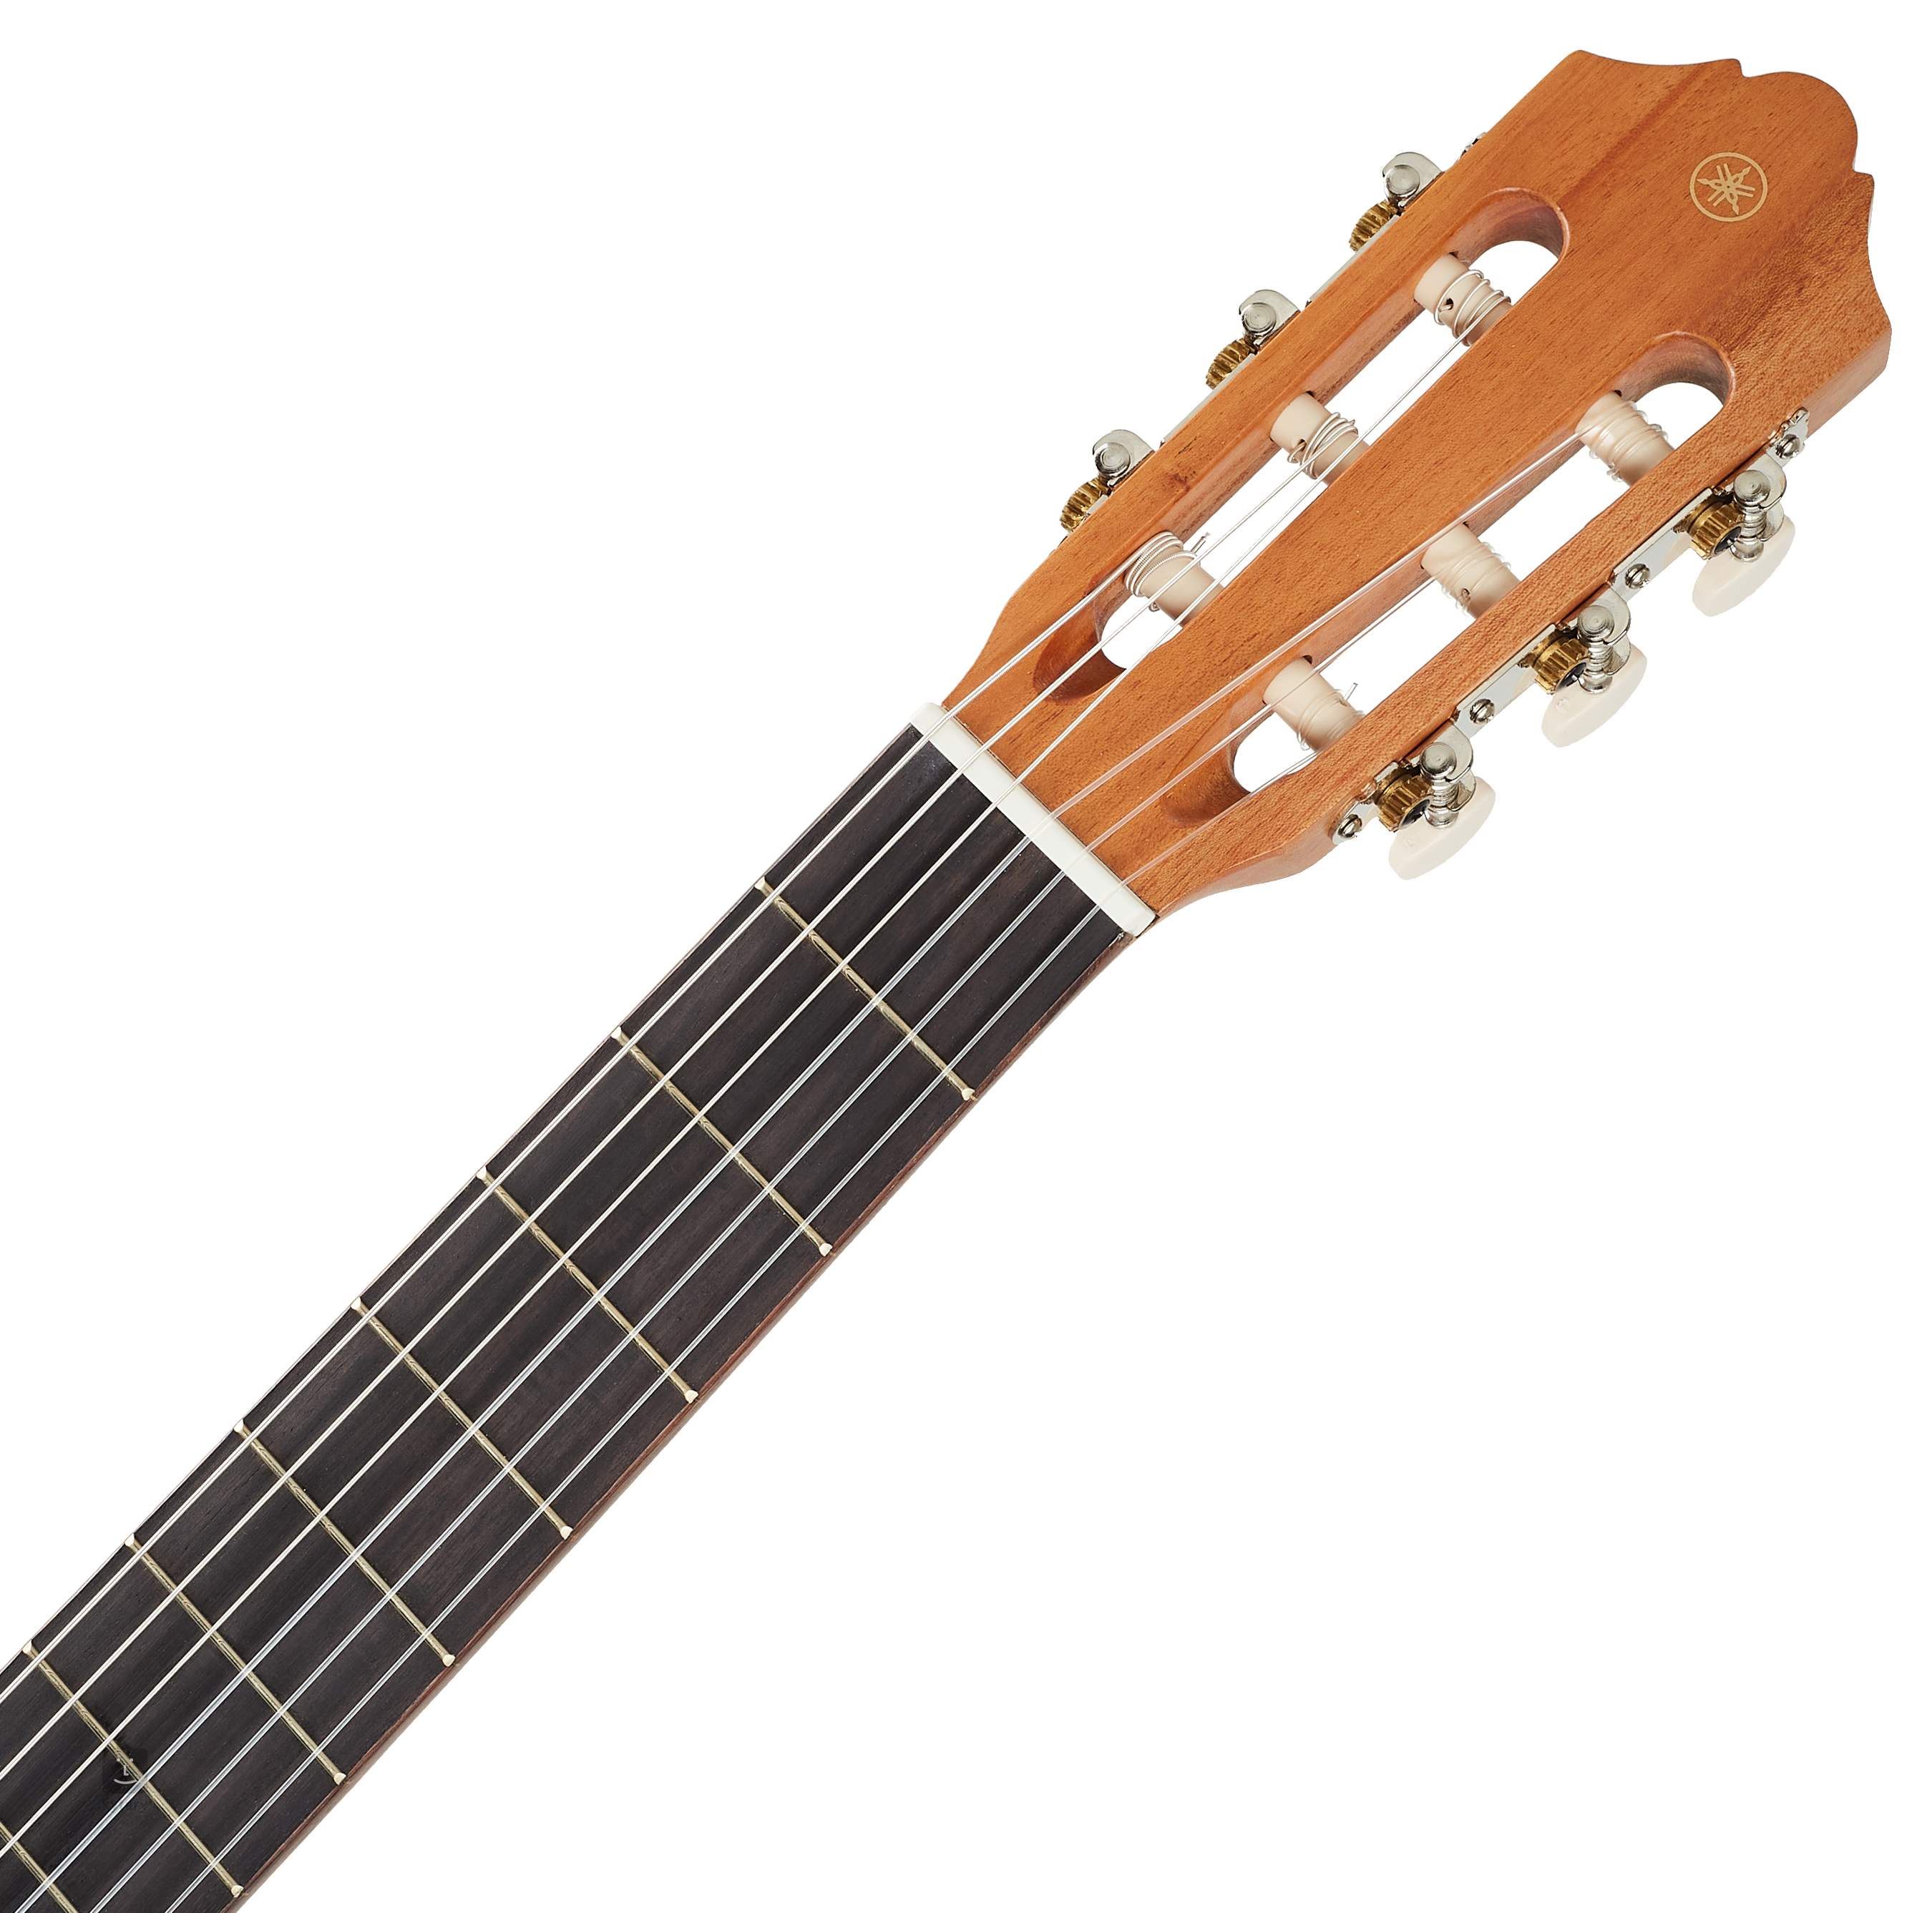 Achat Guitare Classique Yamaha 4/4 C40 Gaucher